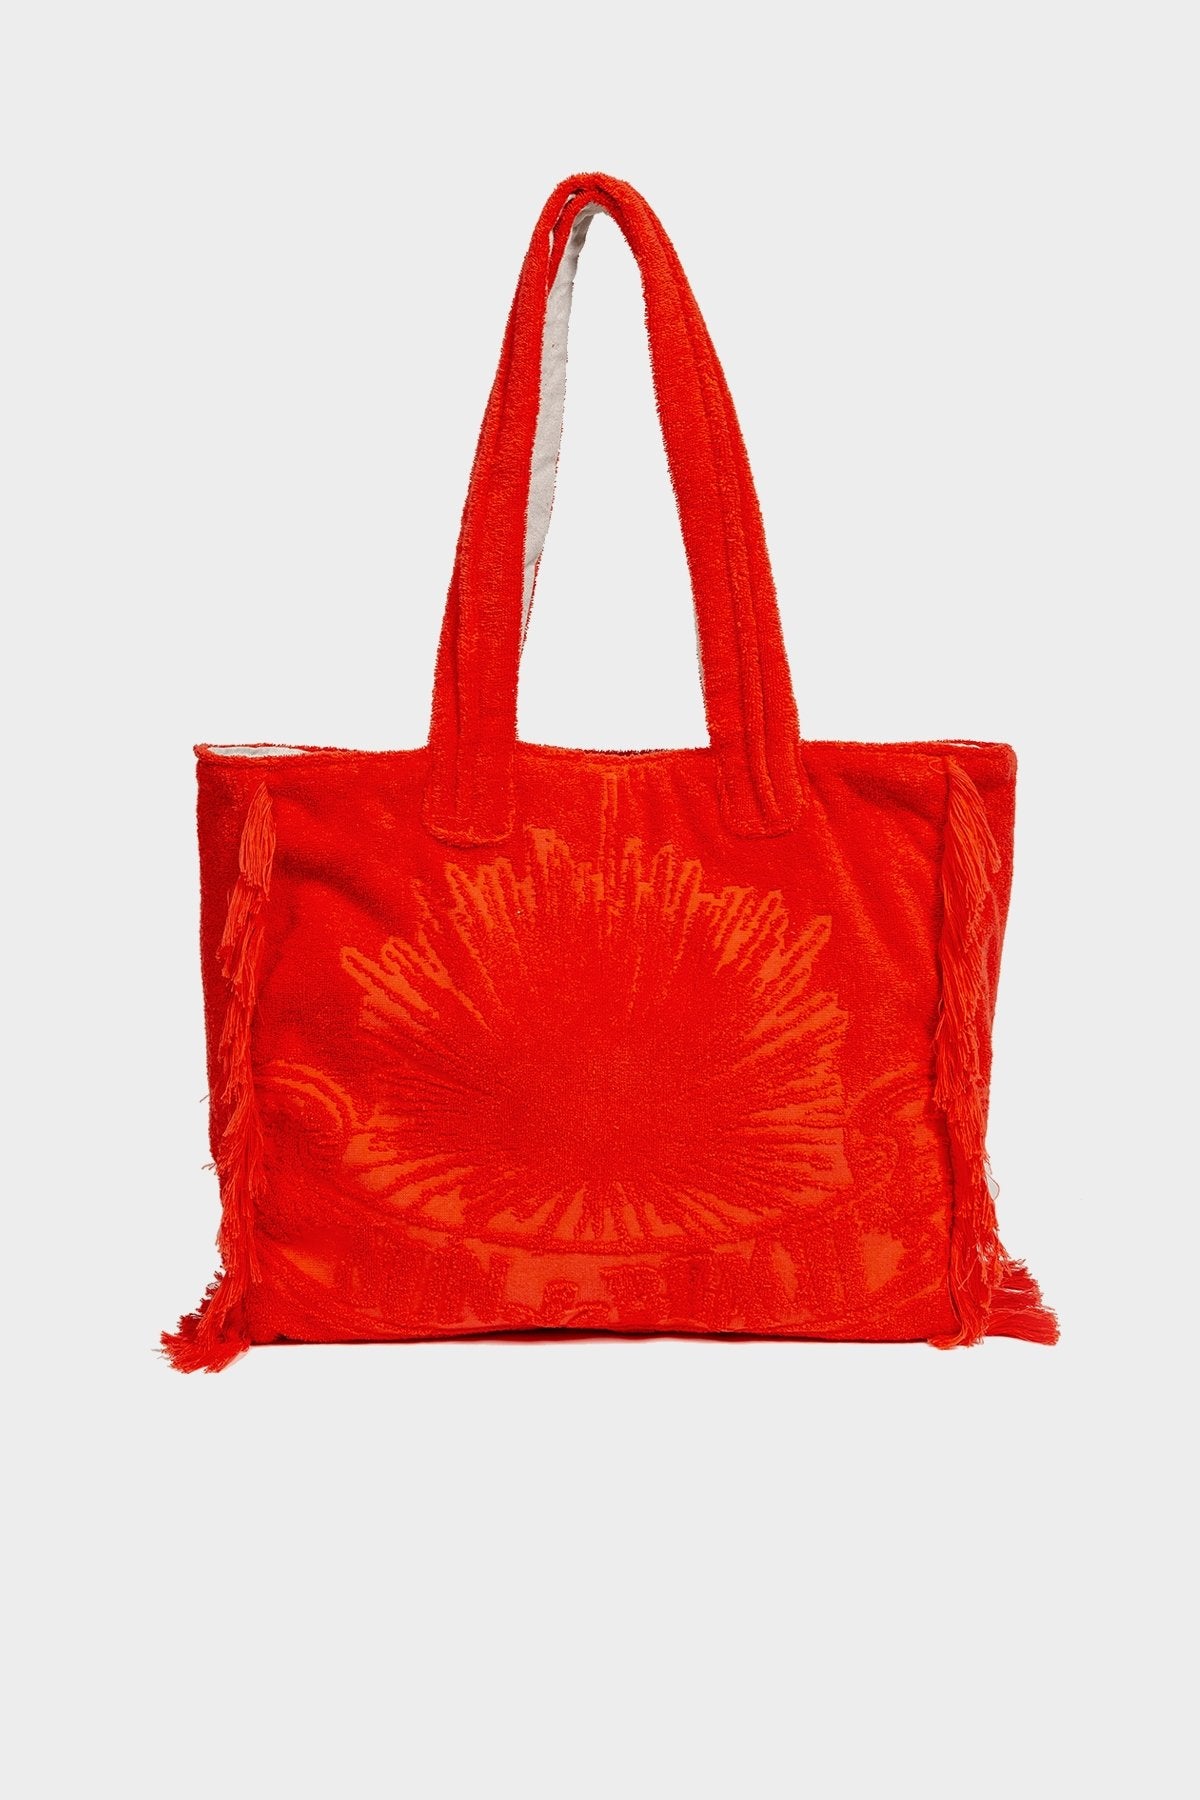 Terry Tote Beach Bag in Just Orange - shop-olivia.com